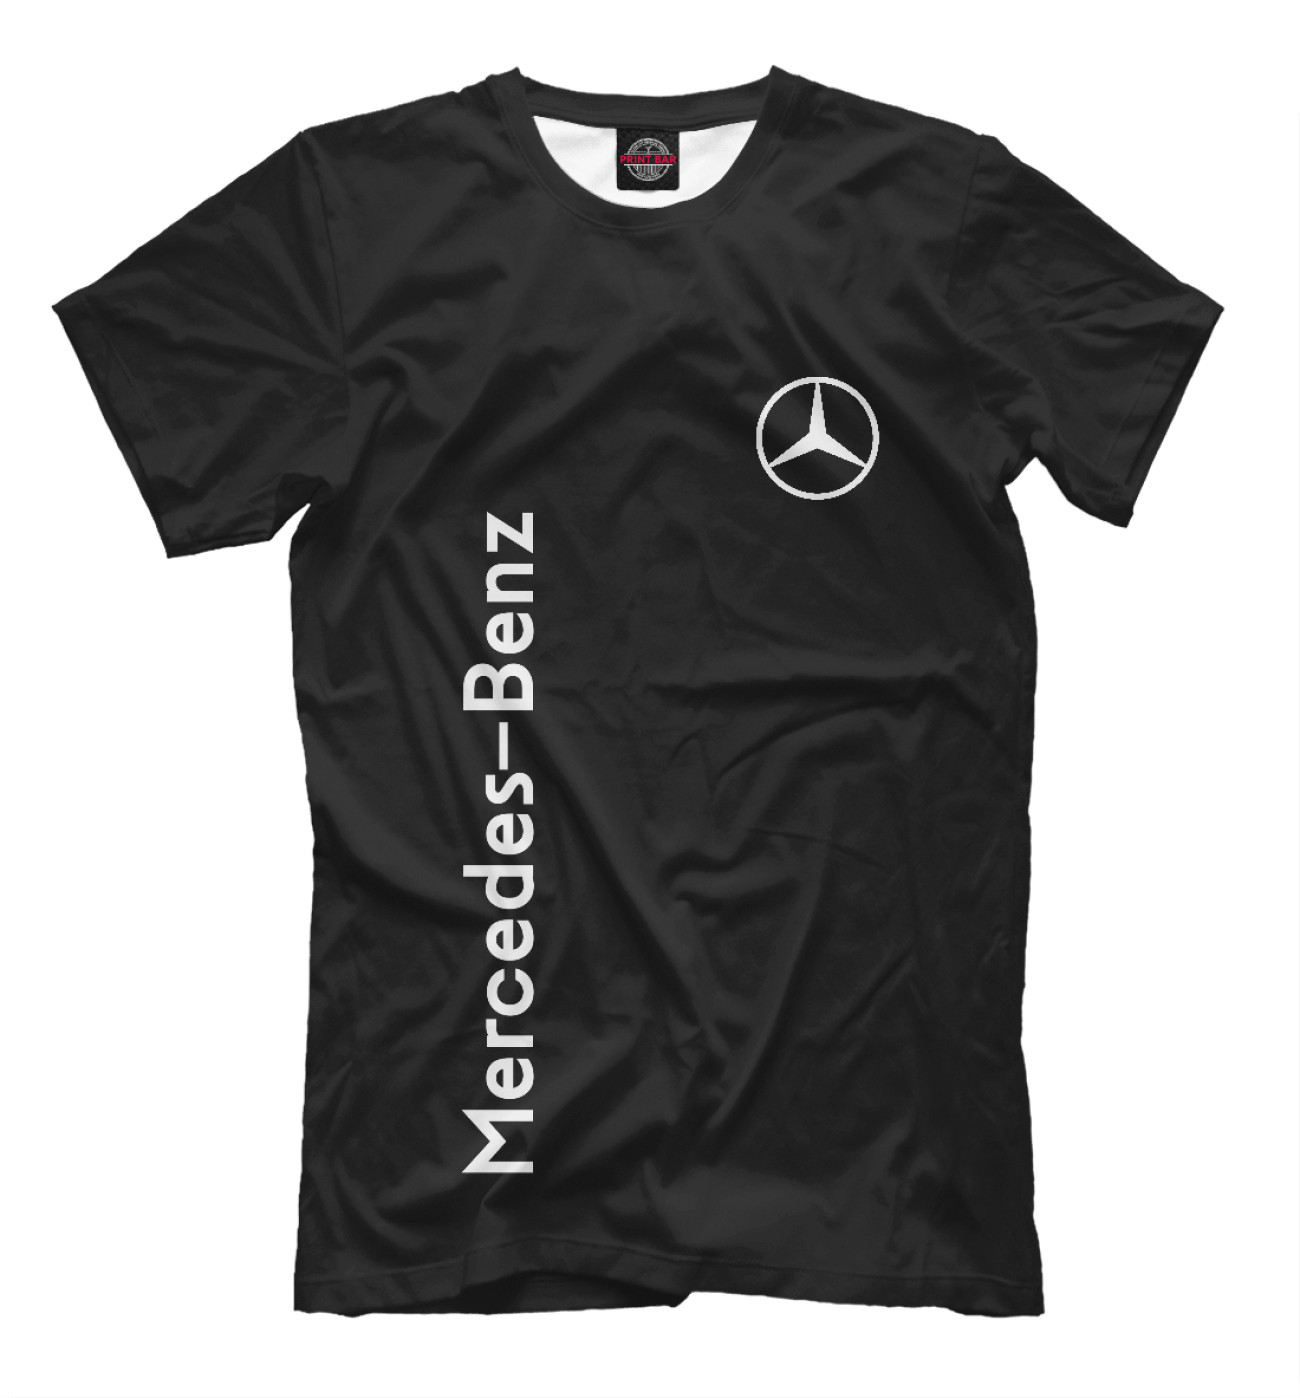 Мужская Футболка Mercedes-Benz, артикул: MER-514531-fut-2